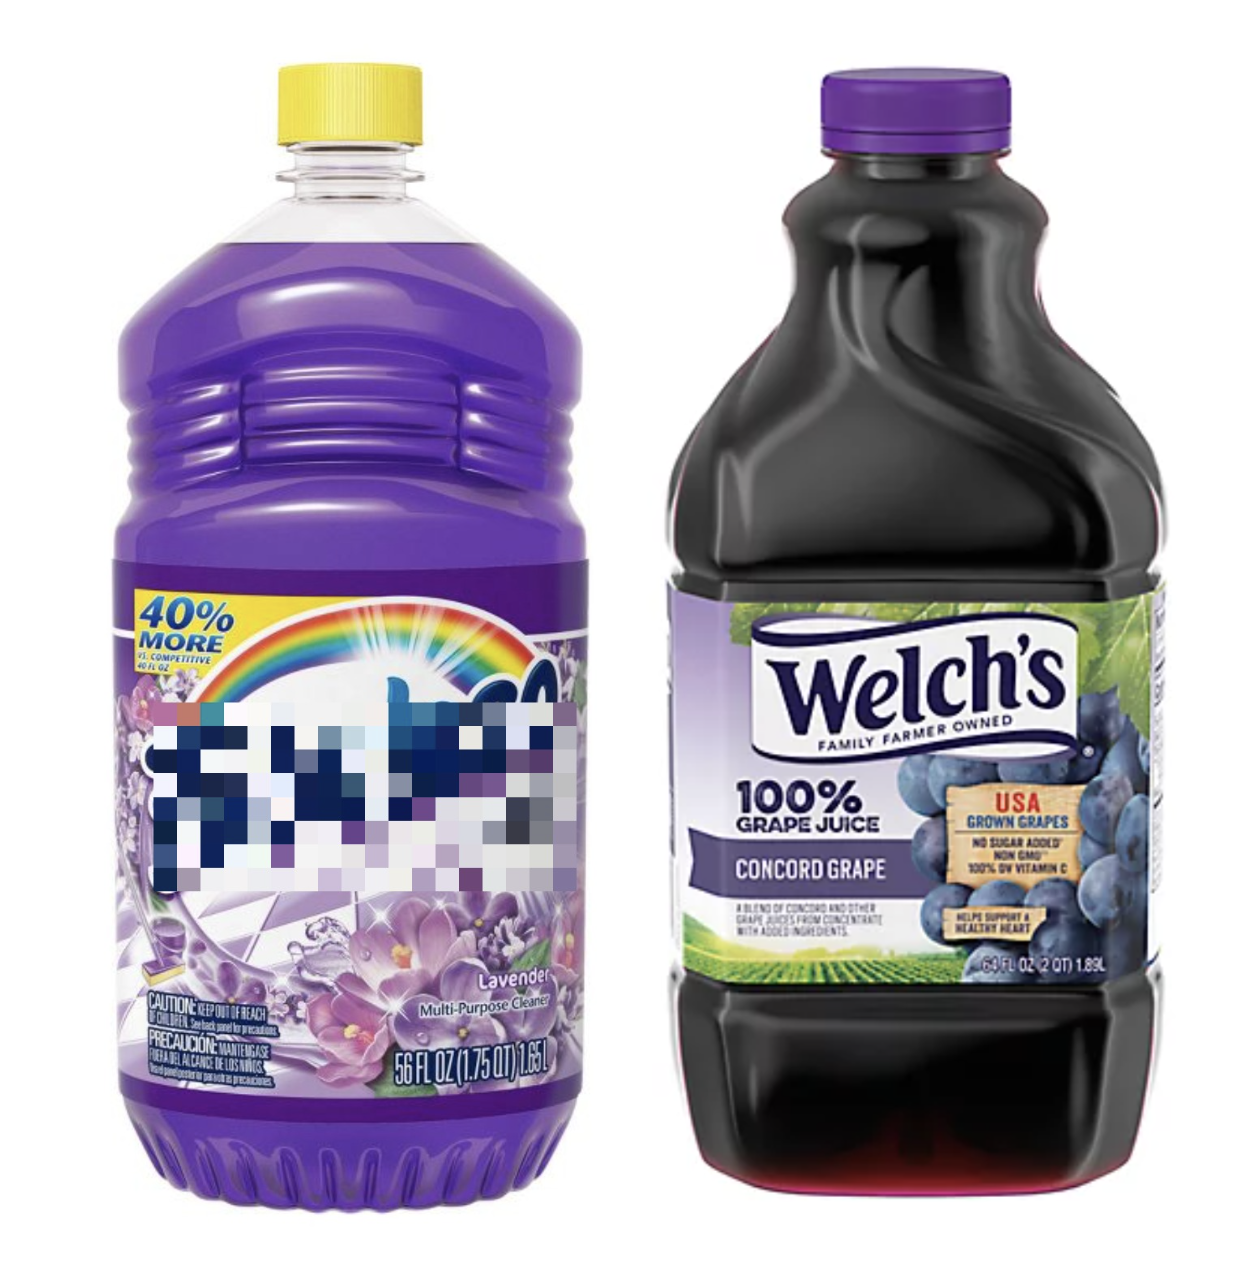 LEFT: All Purpose Cleaner Lavender - 56 Fl. Oz. | RIGHT: Welch's 100% Concord Grape Juice - 64 Fl. Oz.